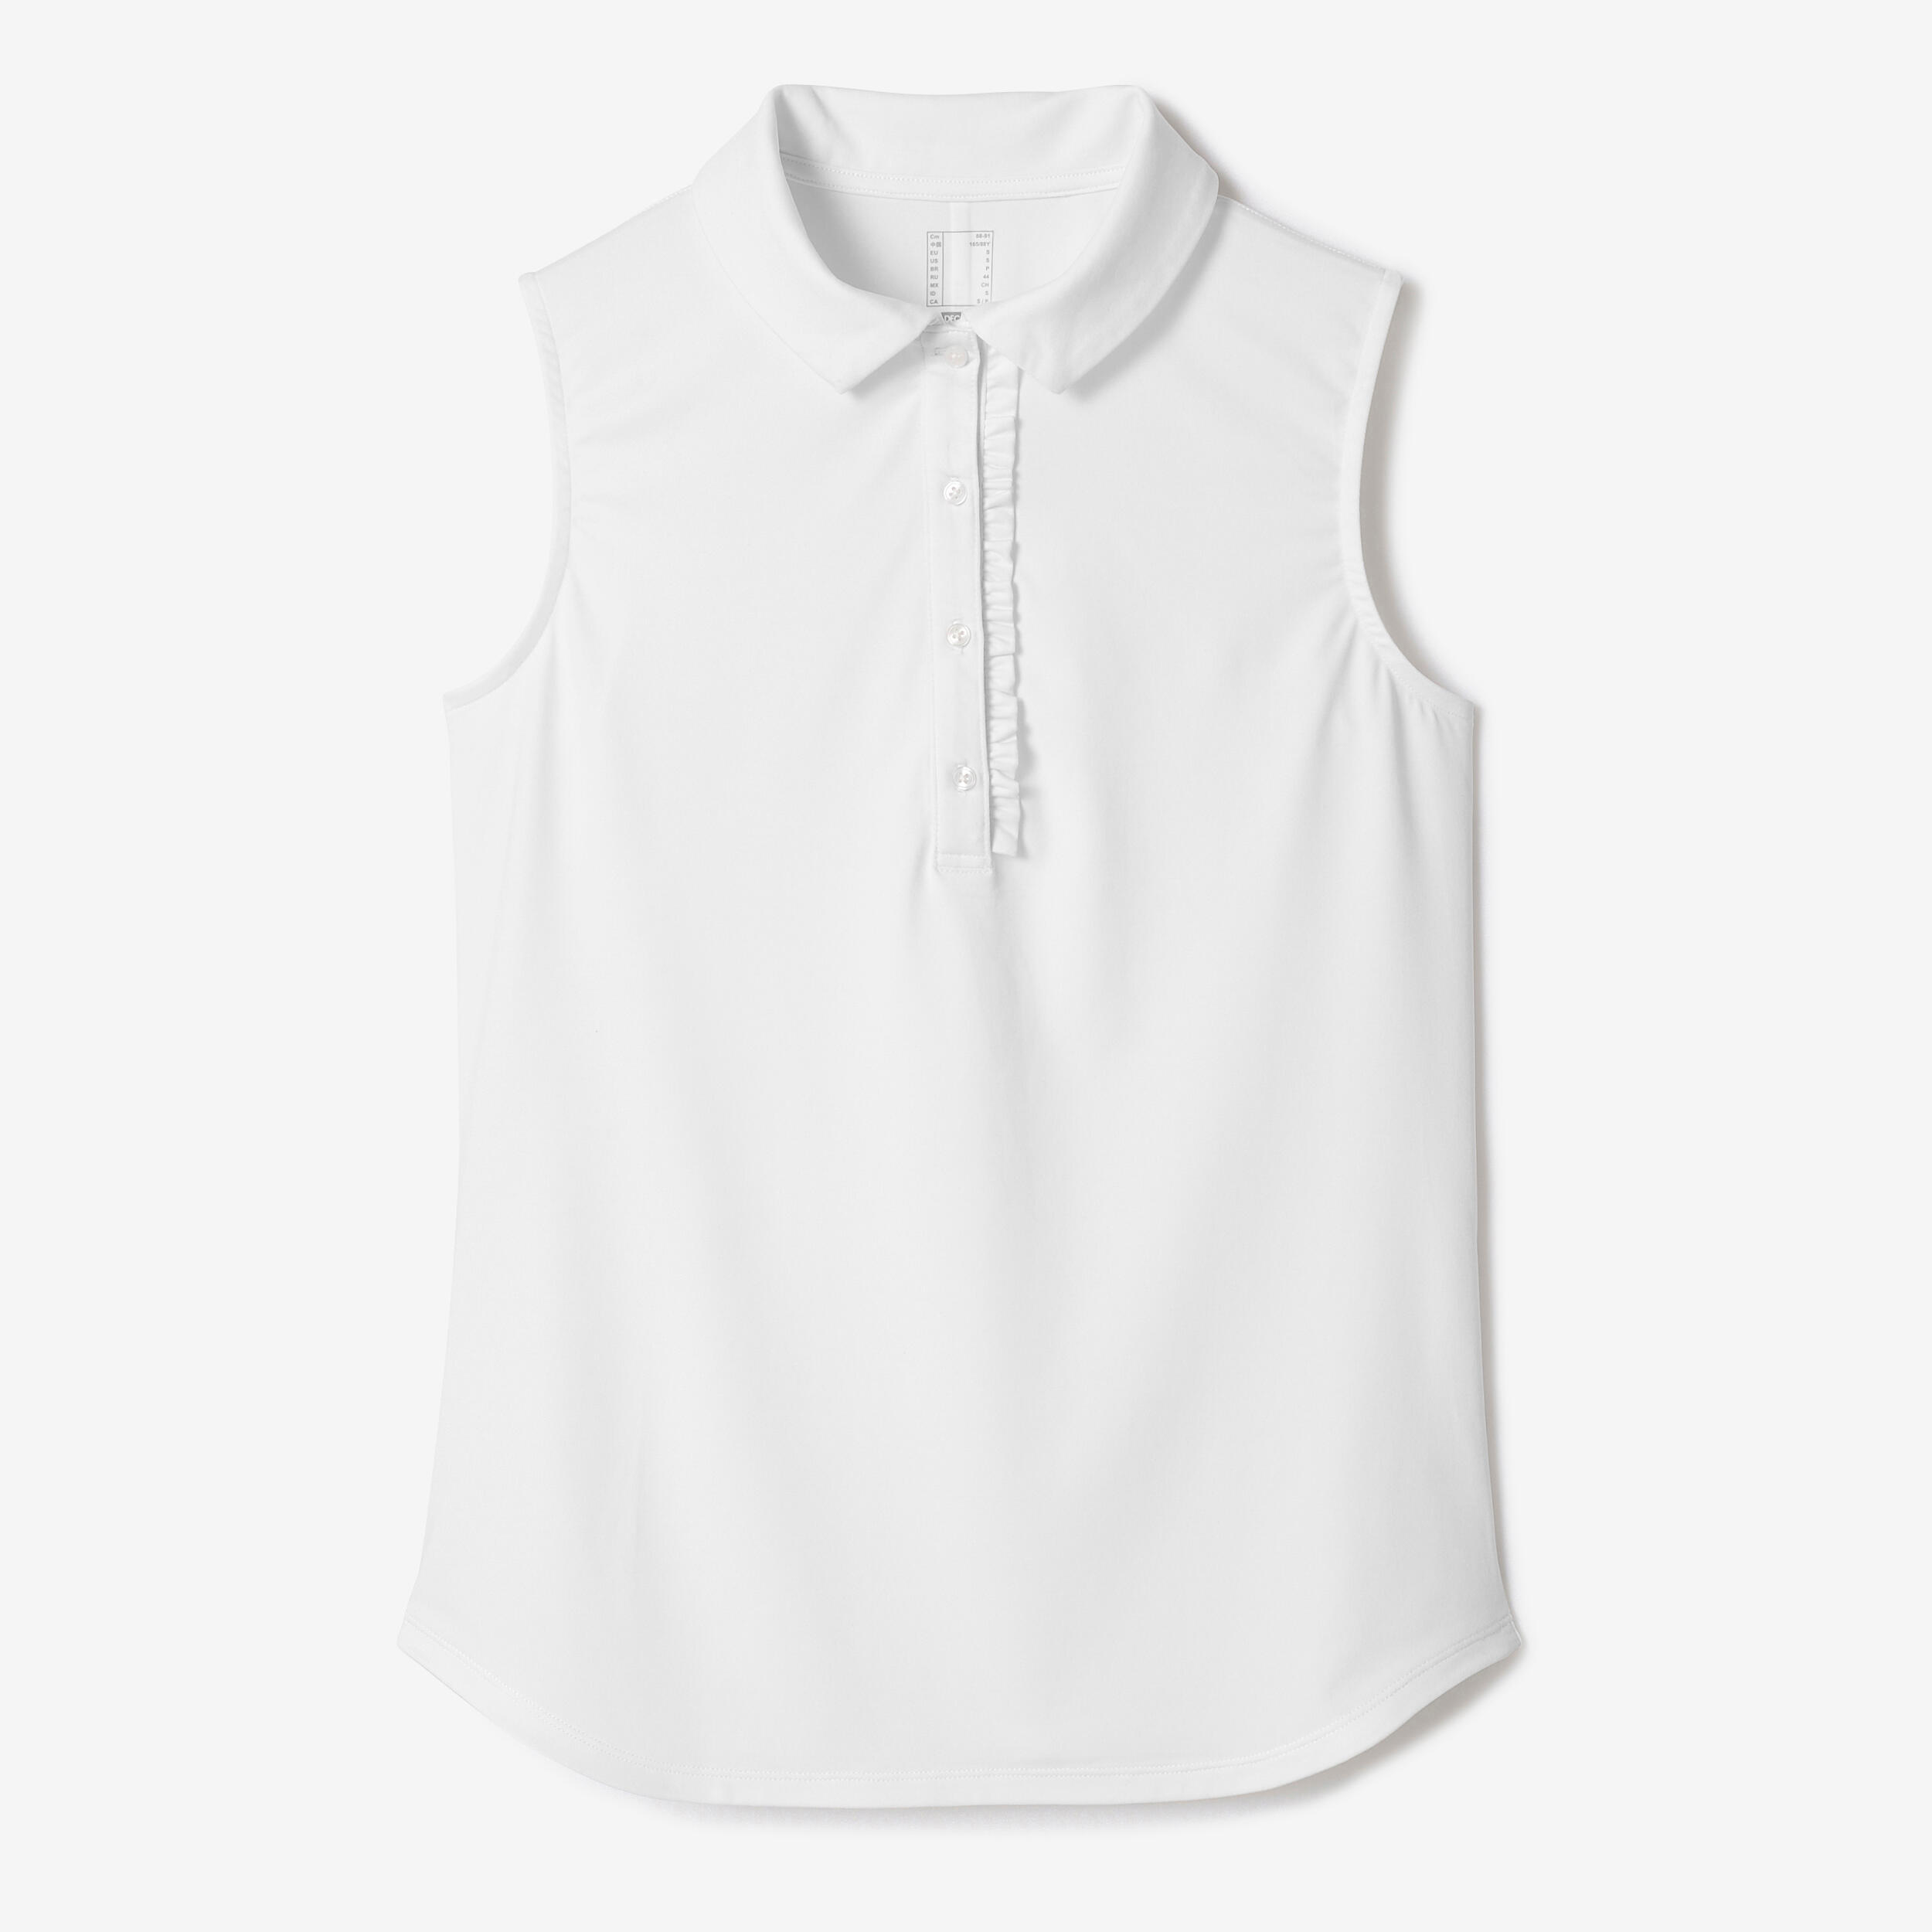 Refurbished Womens sleeveless golf polo shirt - WW500 - B Grade 1/6